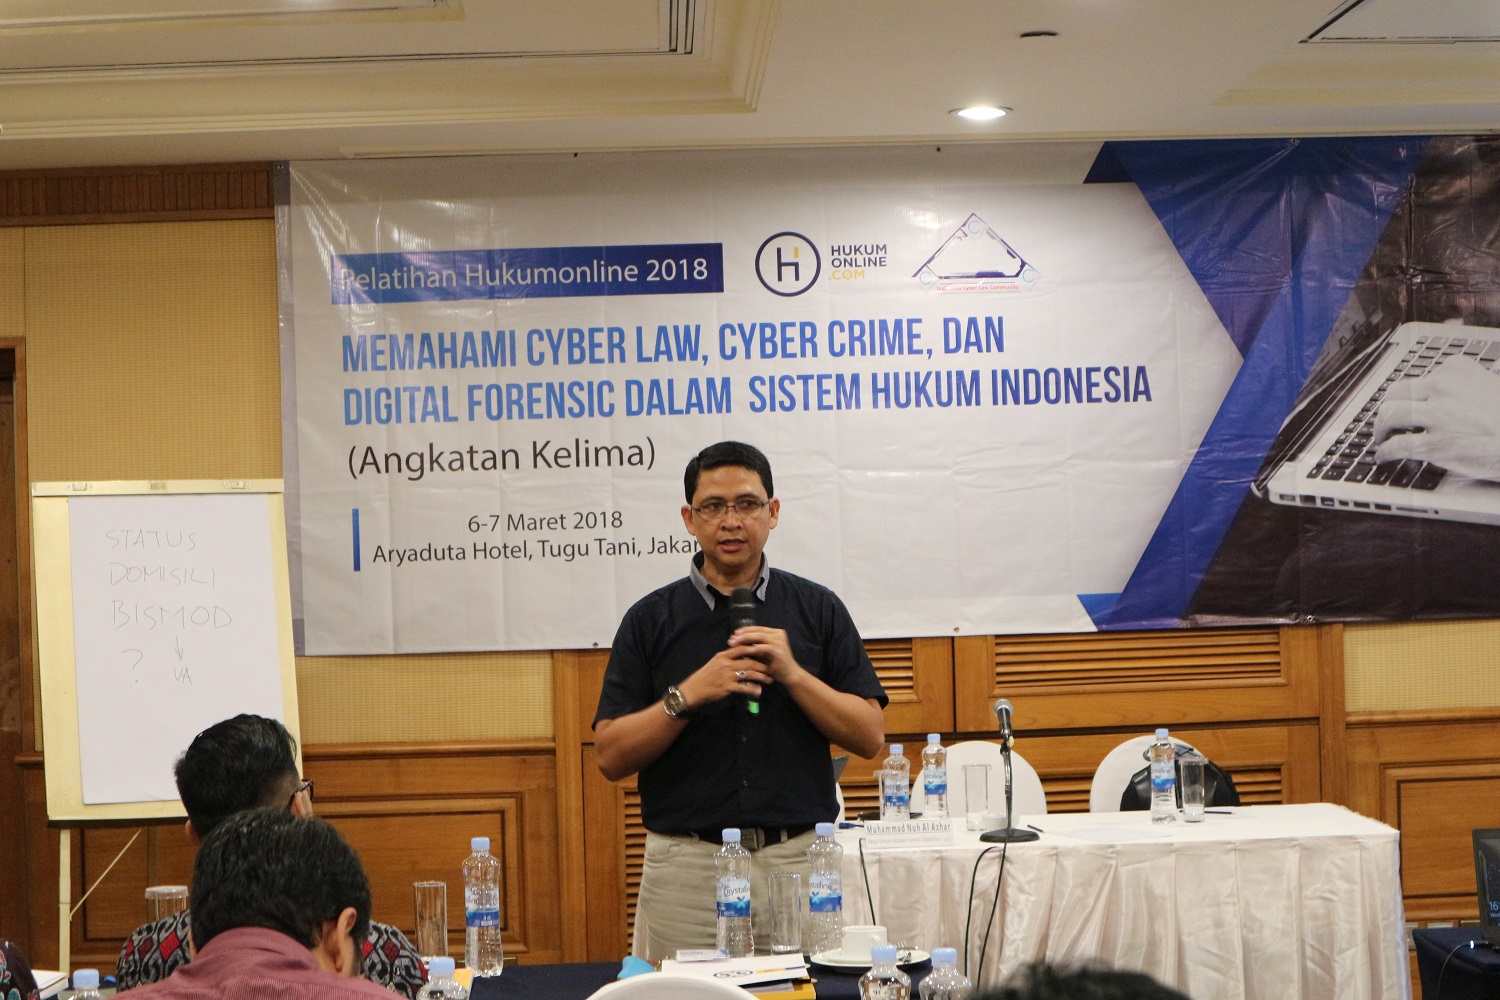 Bapak Muhammad Nuh Al-Azhar, selakuÂ Ketua Umum Asosiasi Forensic Digital Indonesia, dalam Pelatihan Hukumonline 2018 